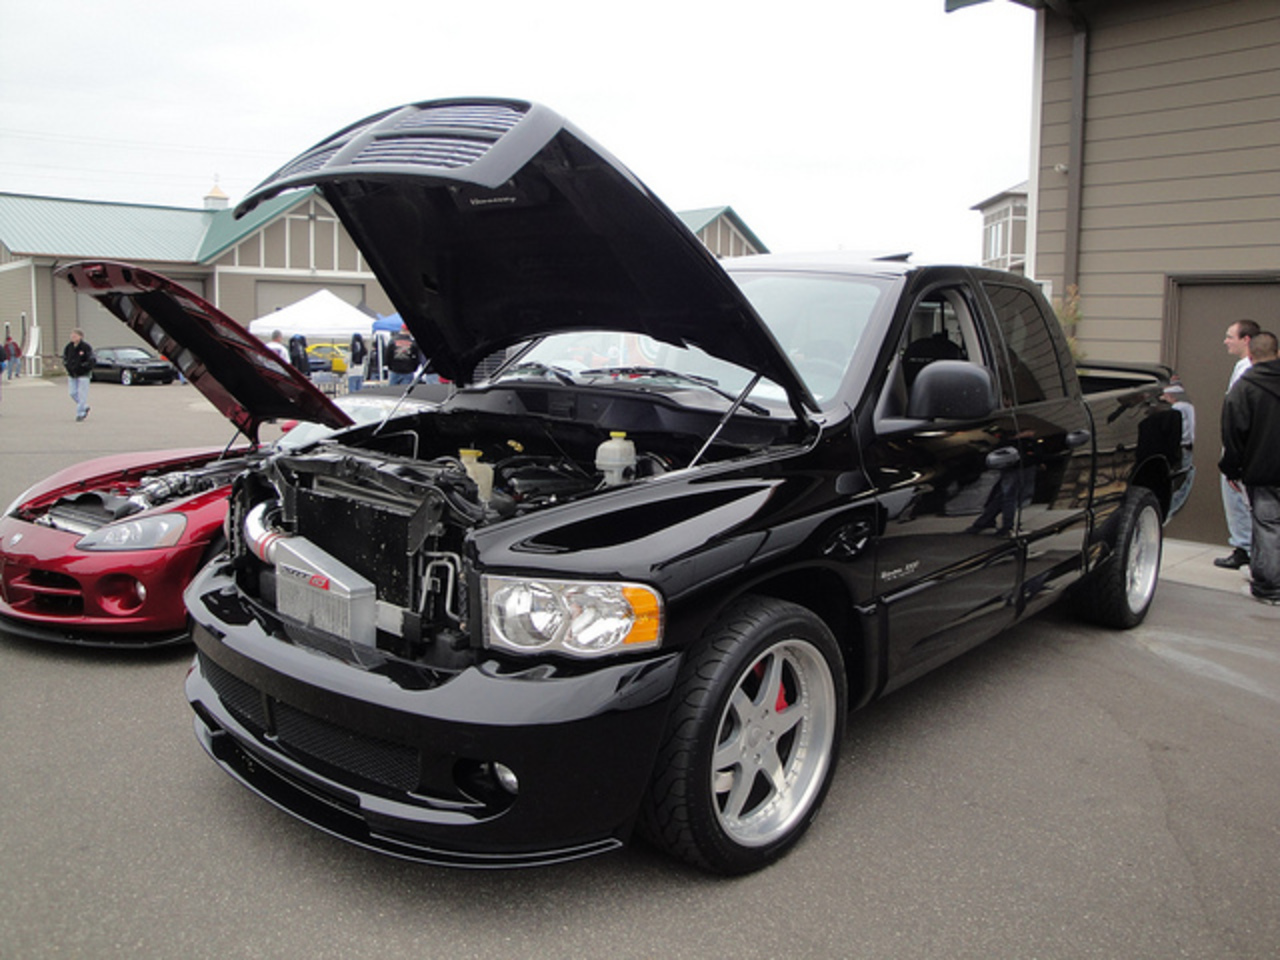 05 Dodge Ram Venom 1000 SRT-10 Twin Turbo Pick-Up | Flickr - Photo ...